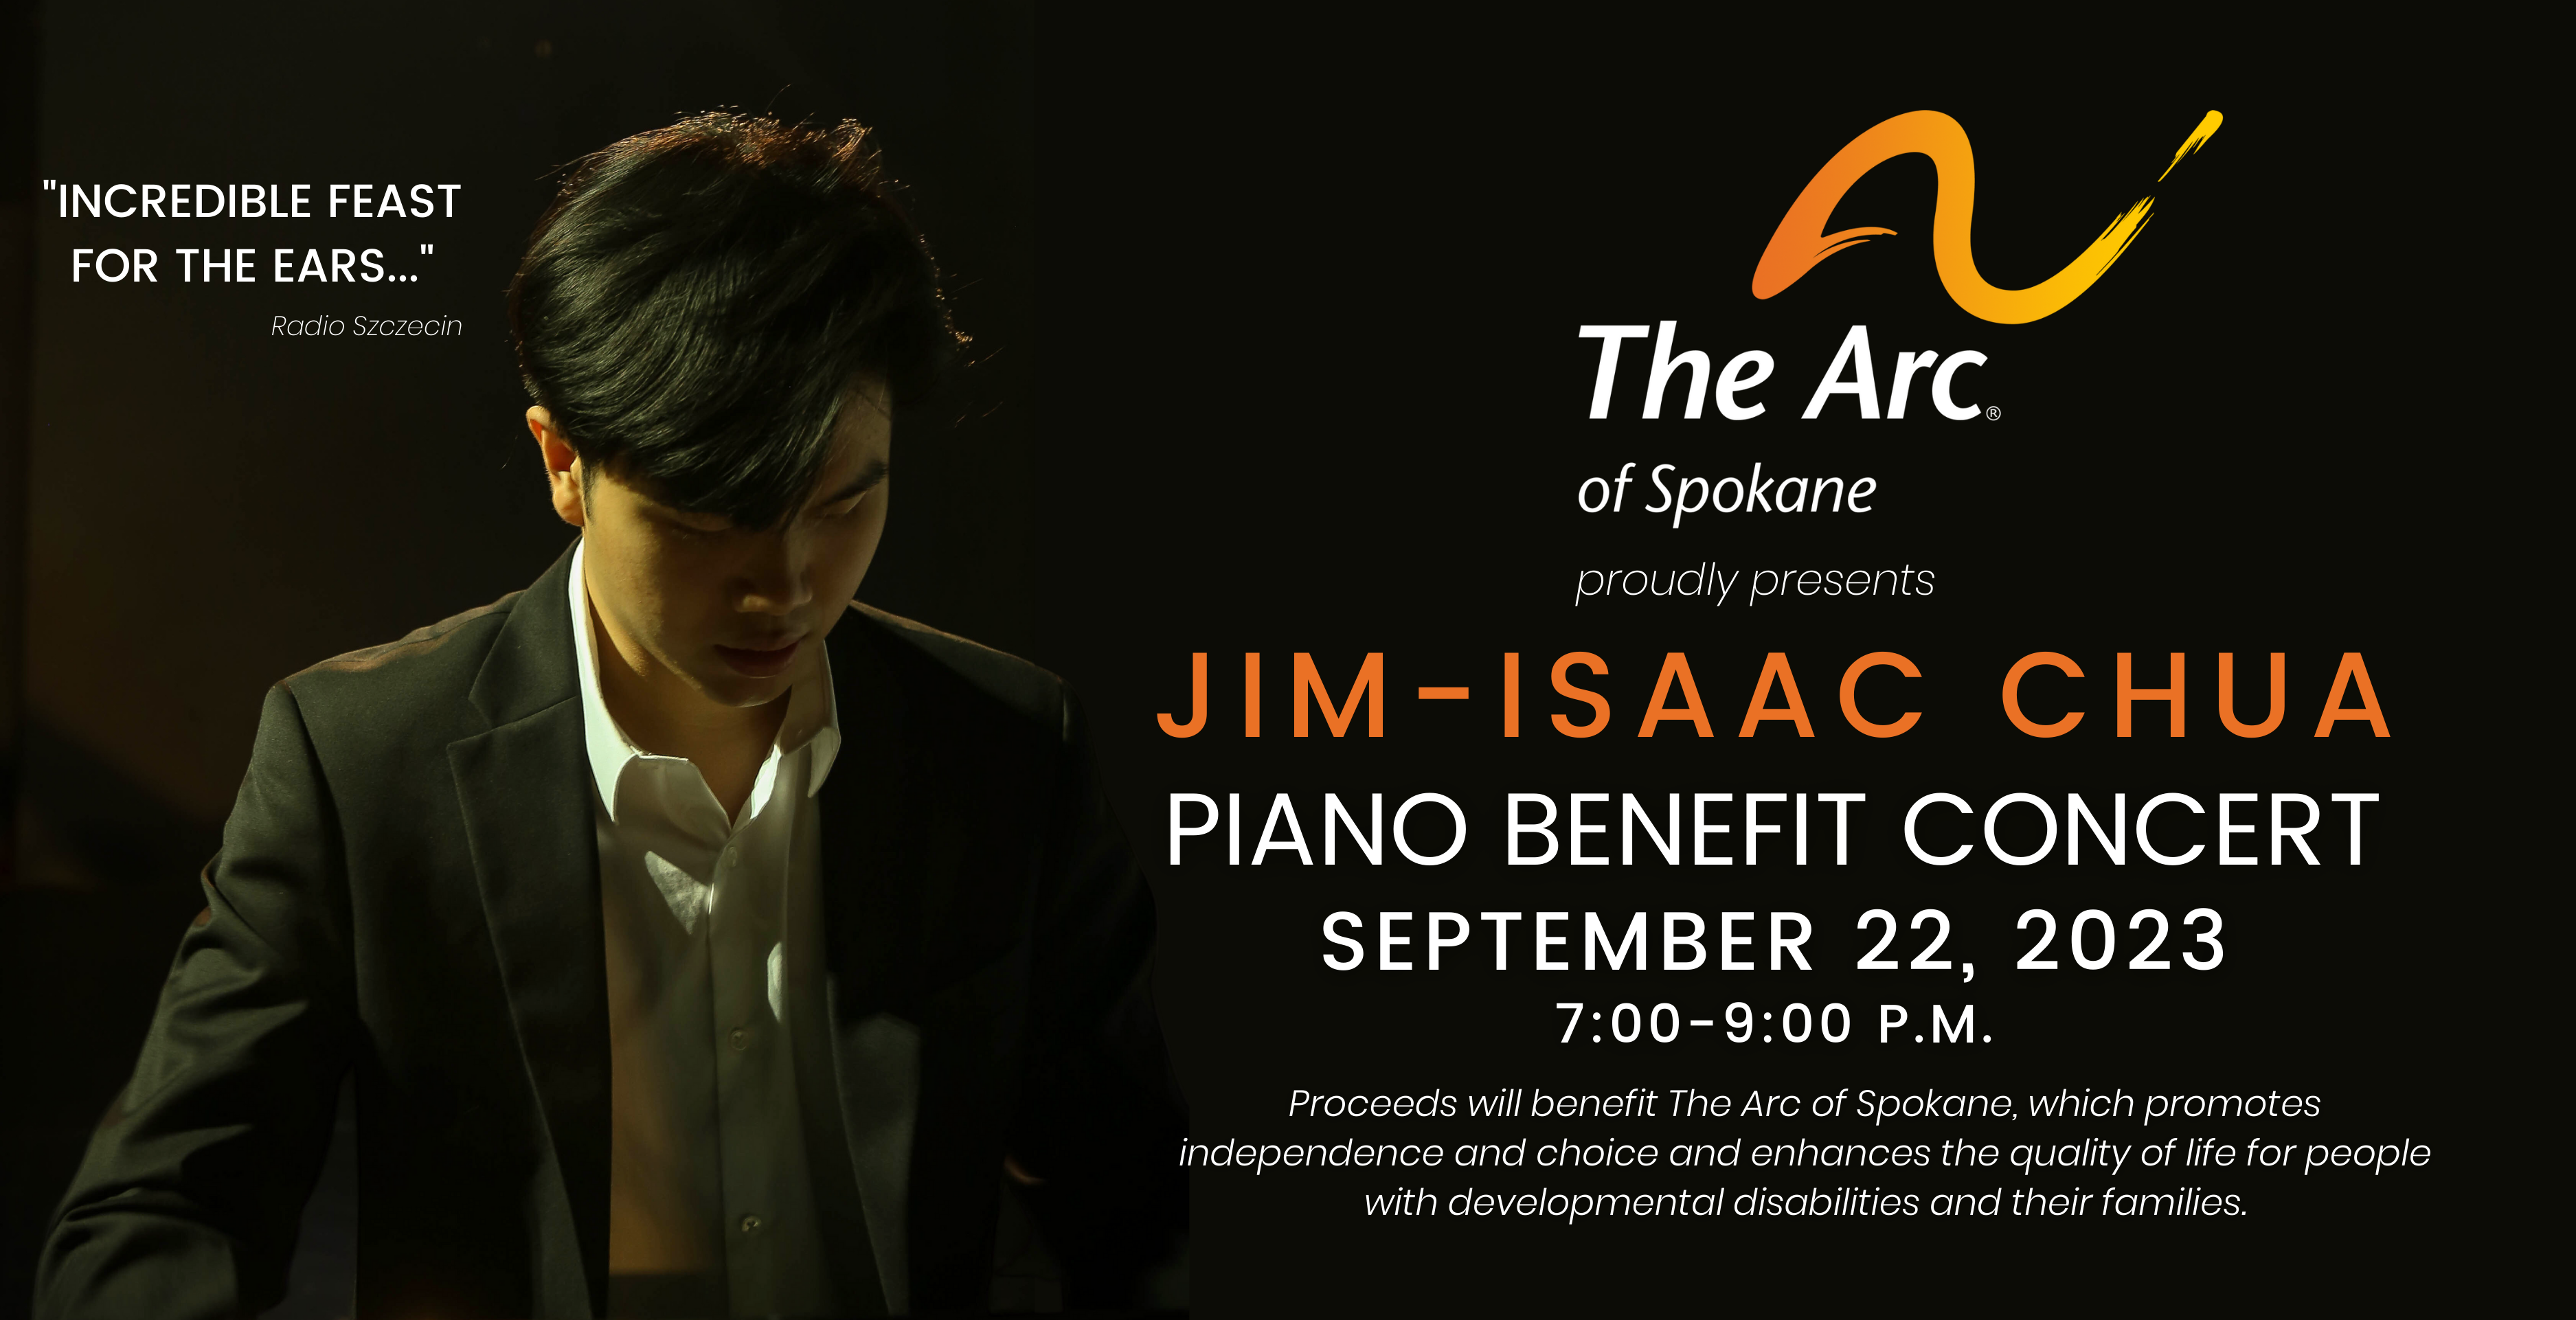 The Arc Benefit Concert with Jim-Isaac Chua